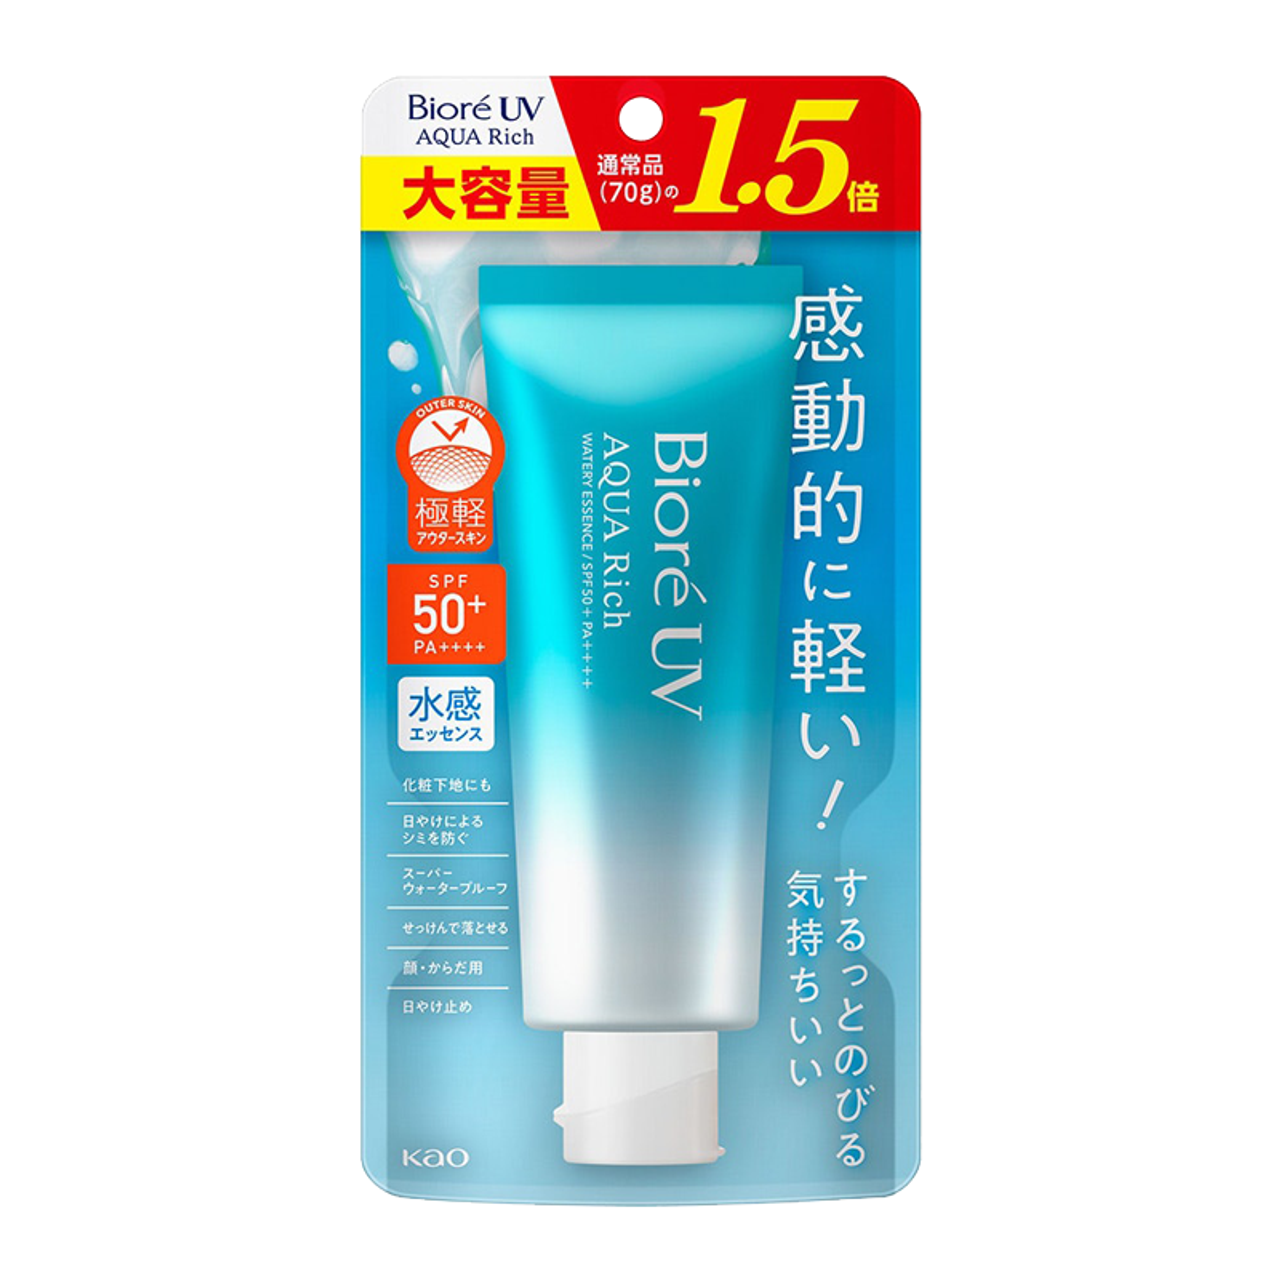 Biore UV Aqua Rich Watery Essence SPF 50 PA++++ Beauty Kao 105g (Value Size)  